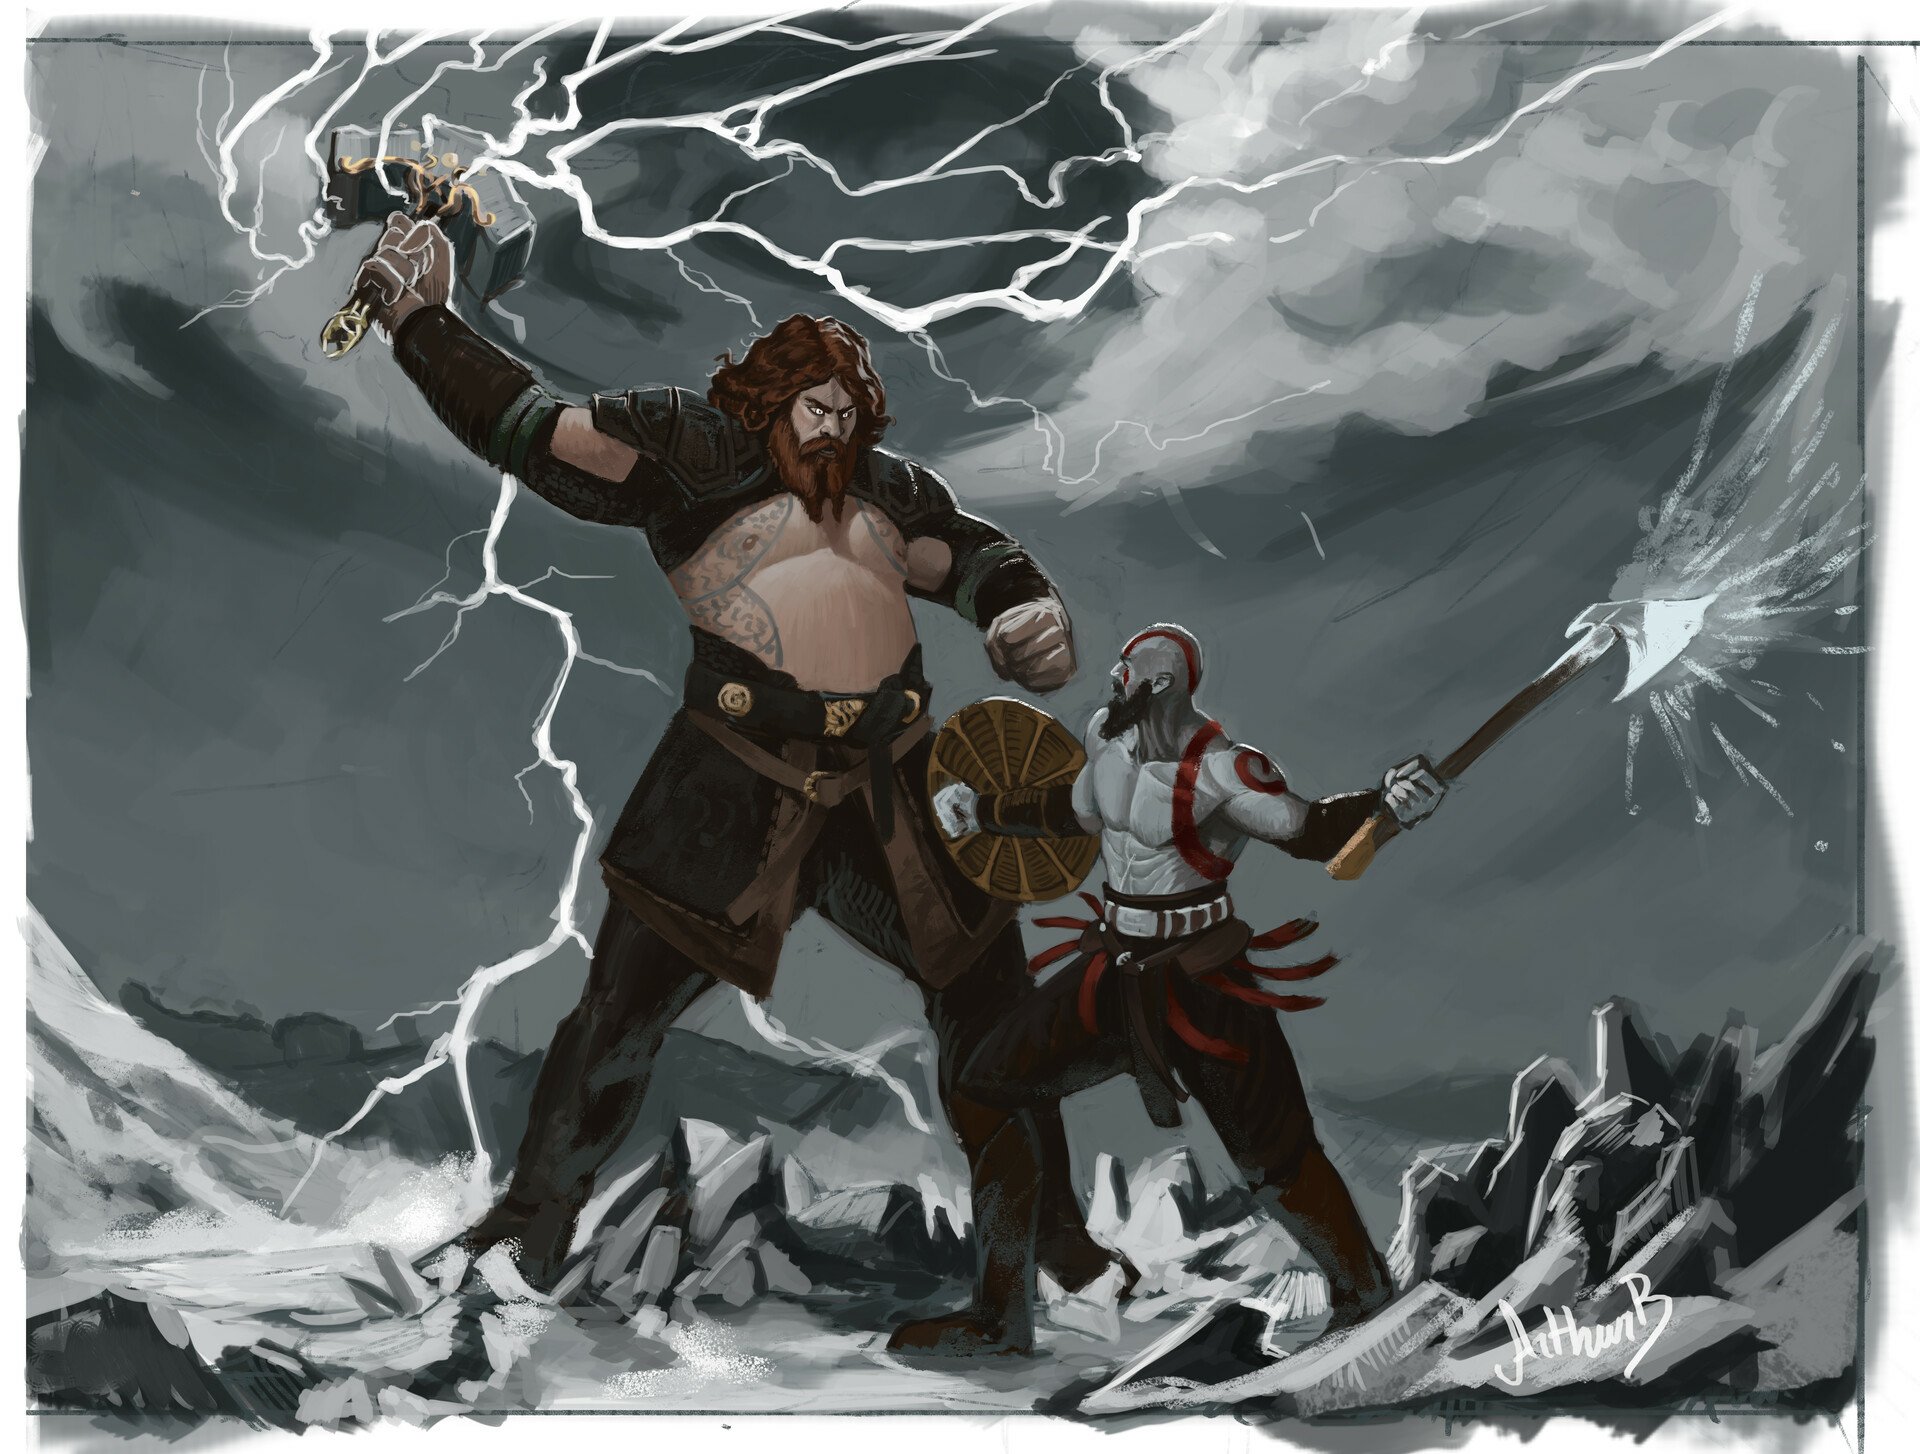 Thor versus Kratos by Arthur Barros